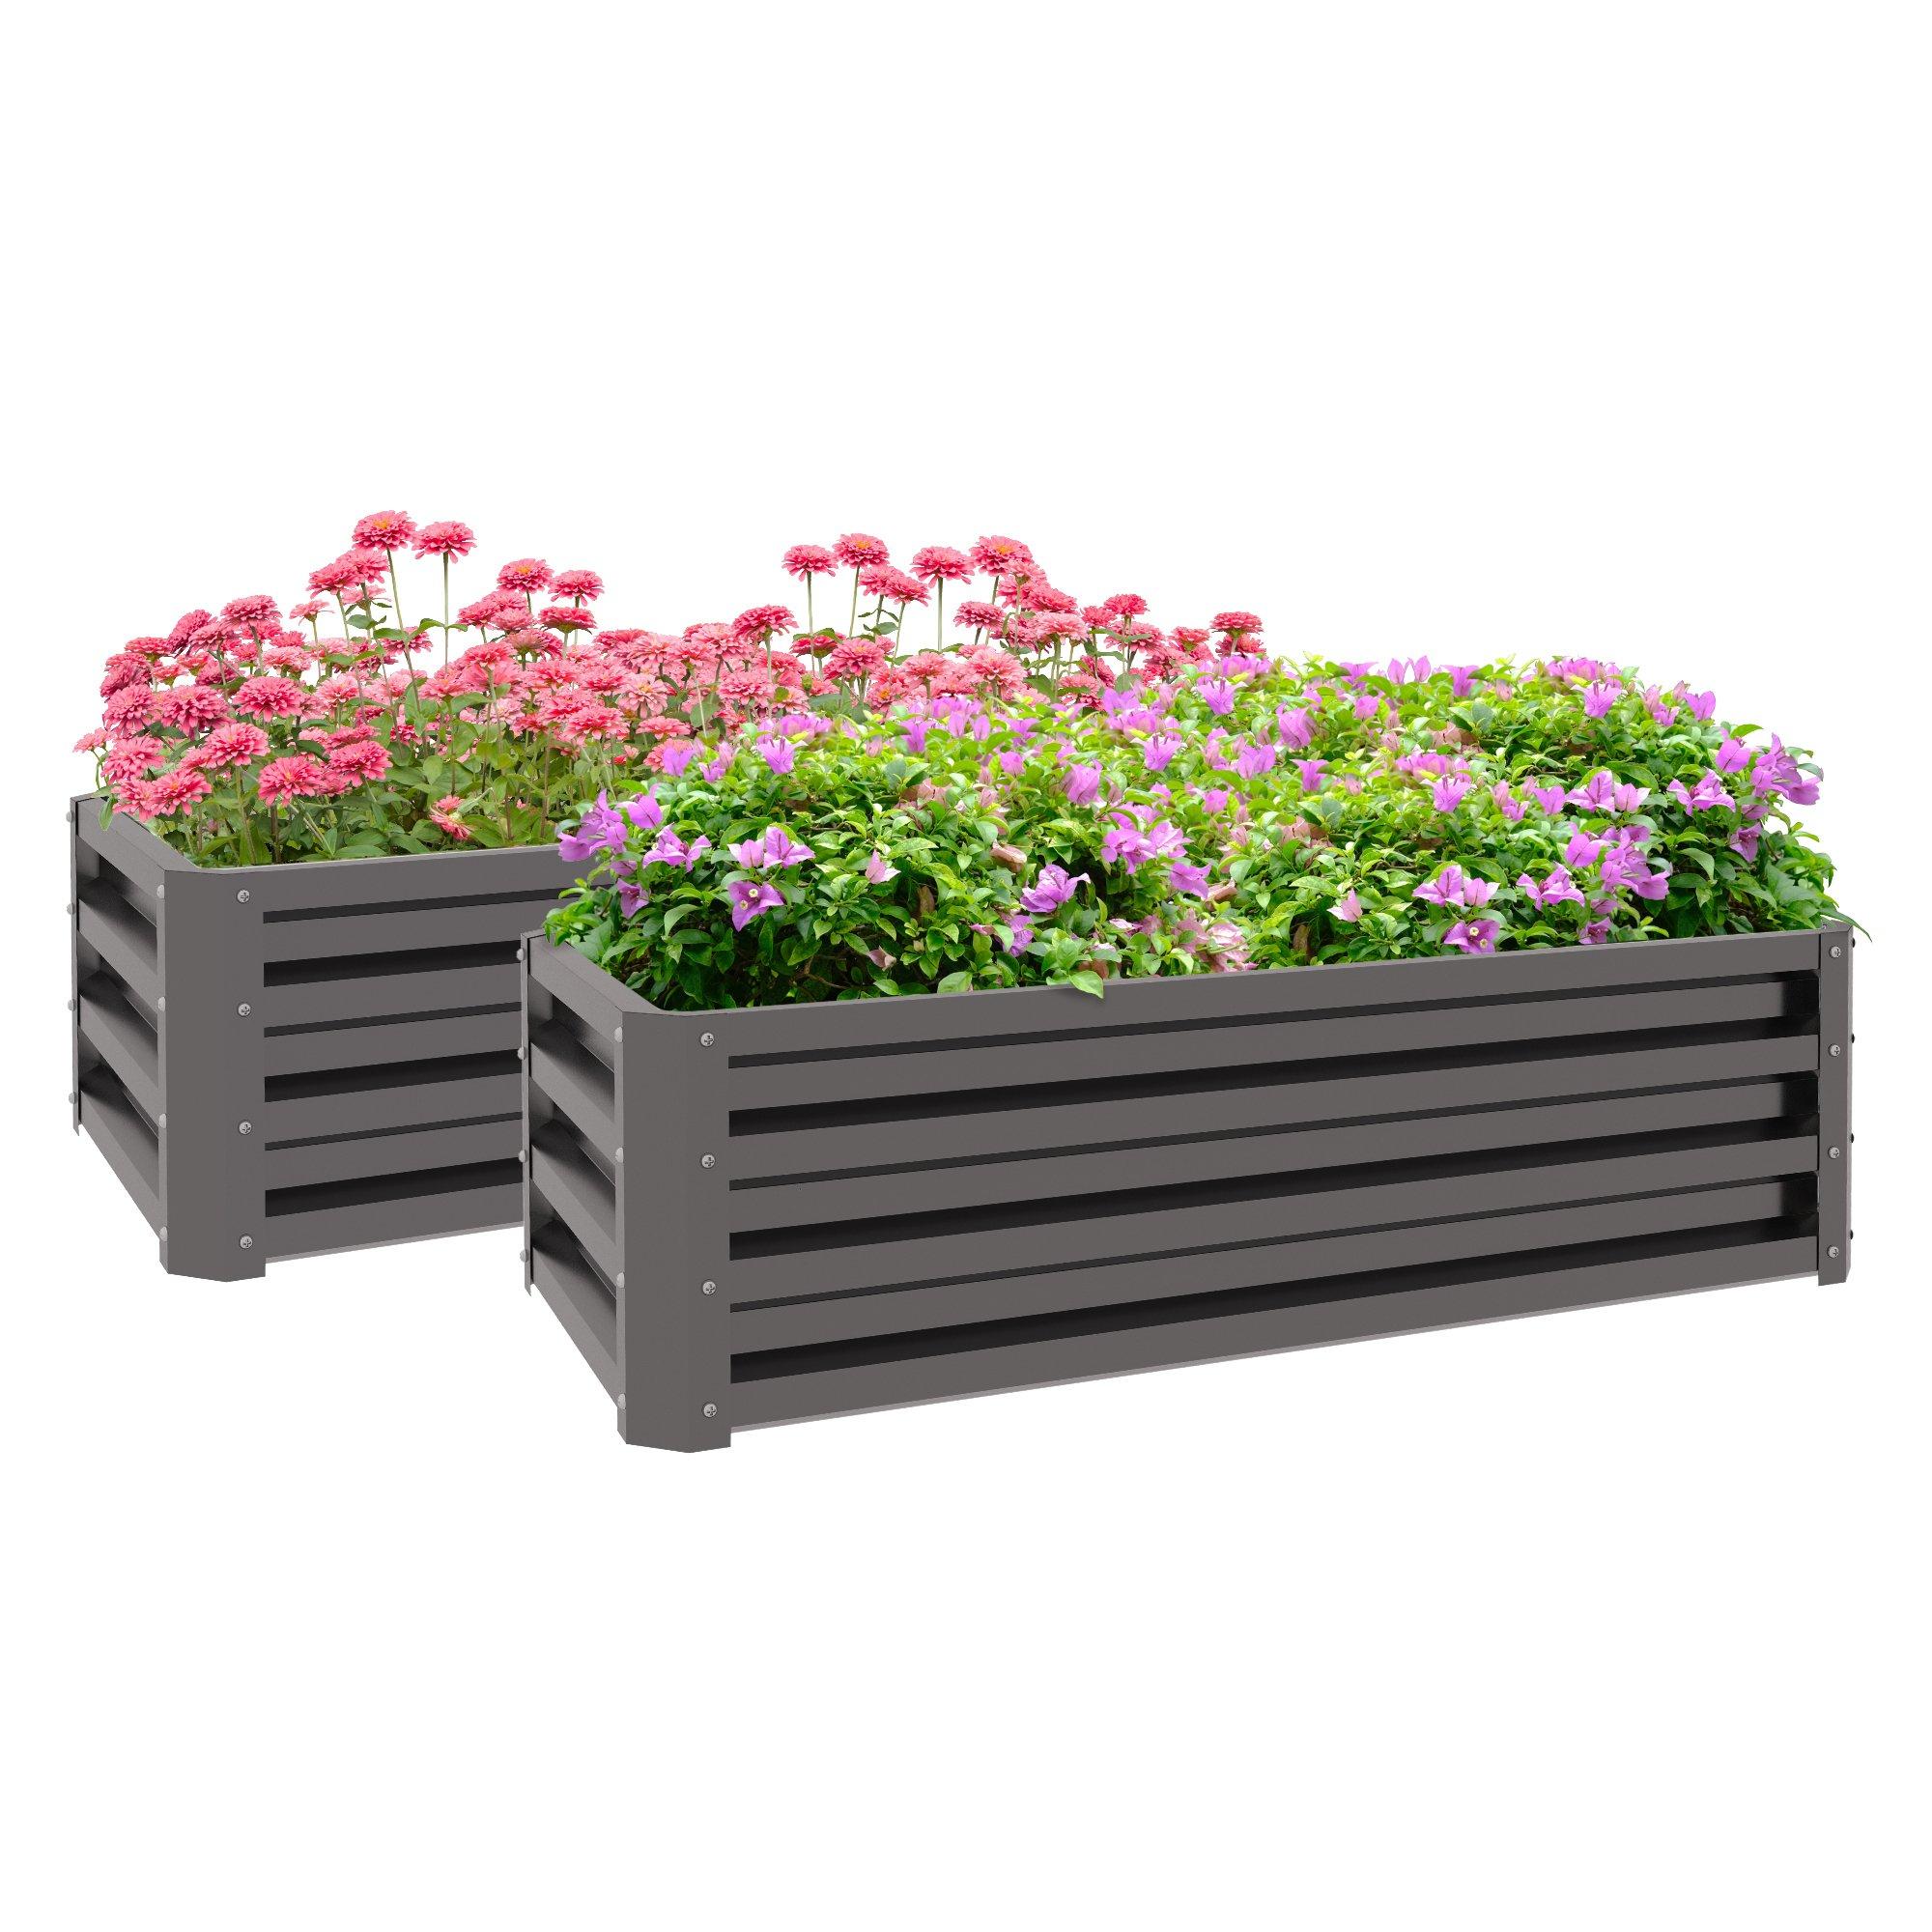 Set of 2 Outdoor Planter Box, Galvanised Steel Raised Garden Bed